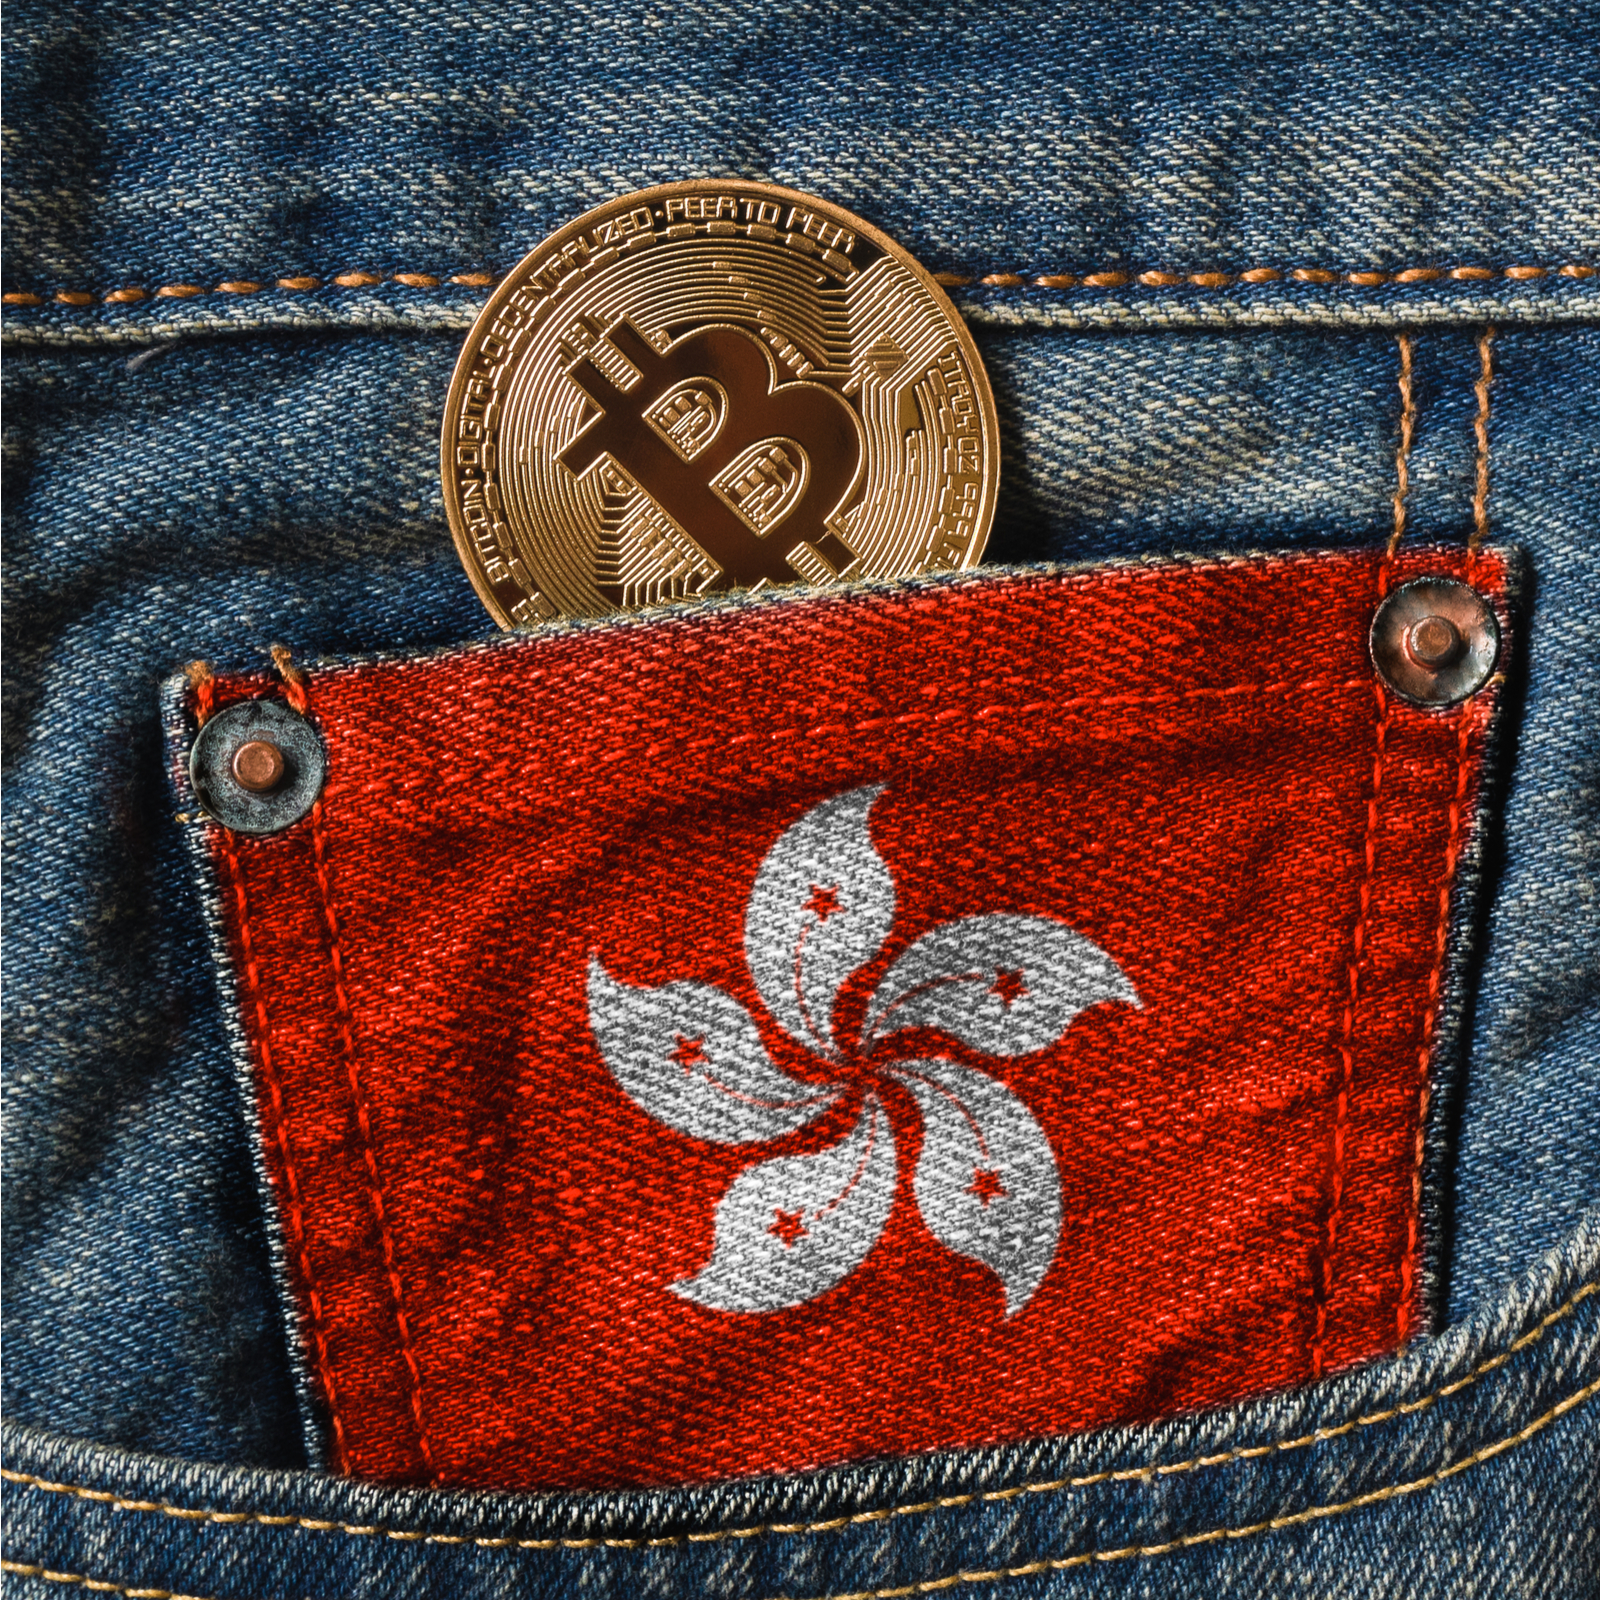 Hong Kong Regulator: Cryptocurrencies 'May Not Qualify as Securities'